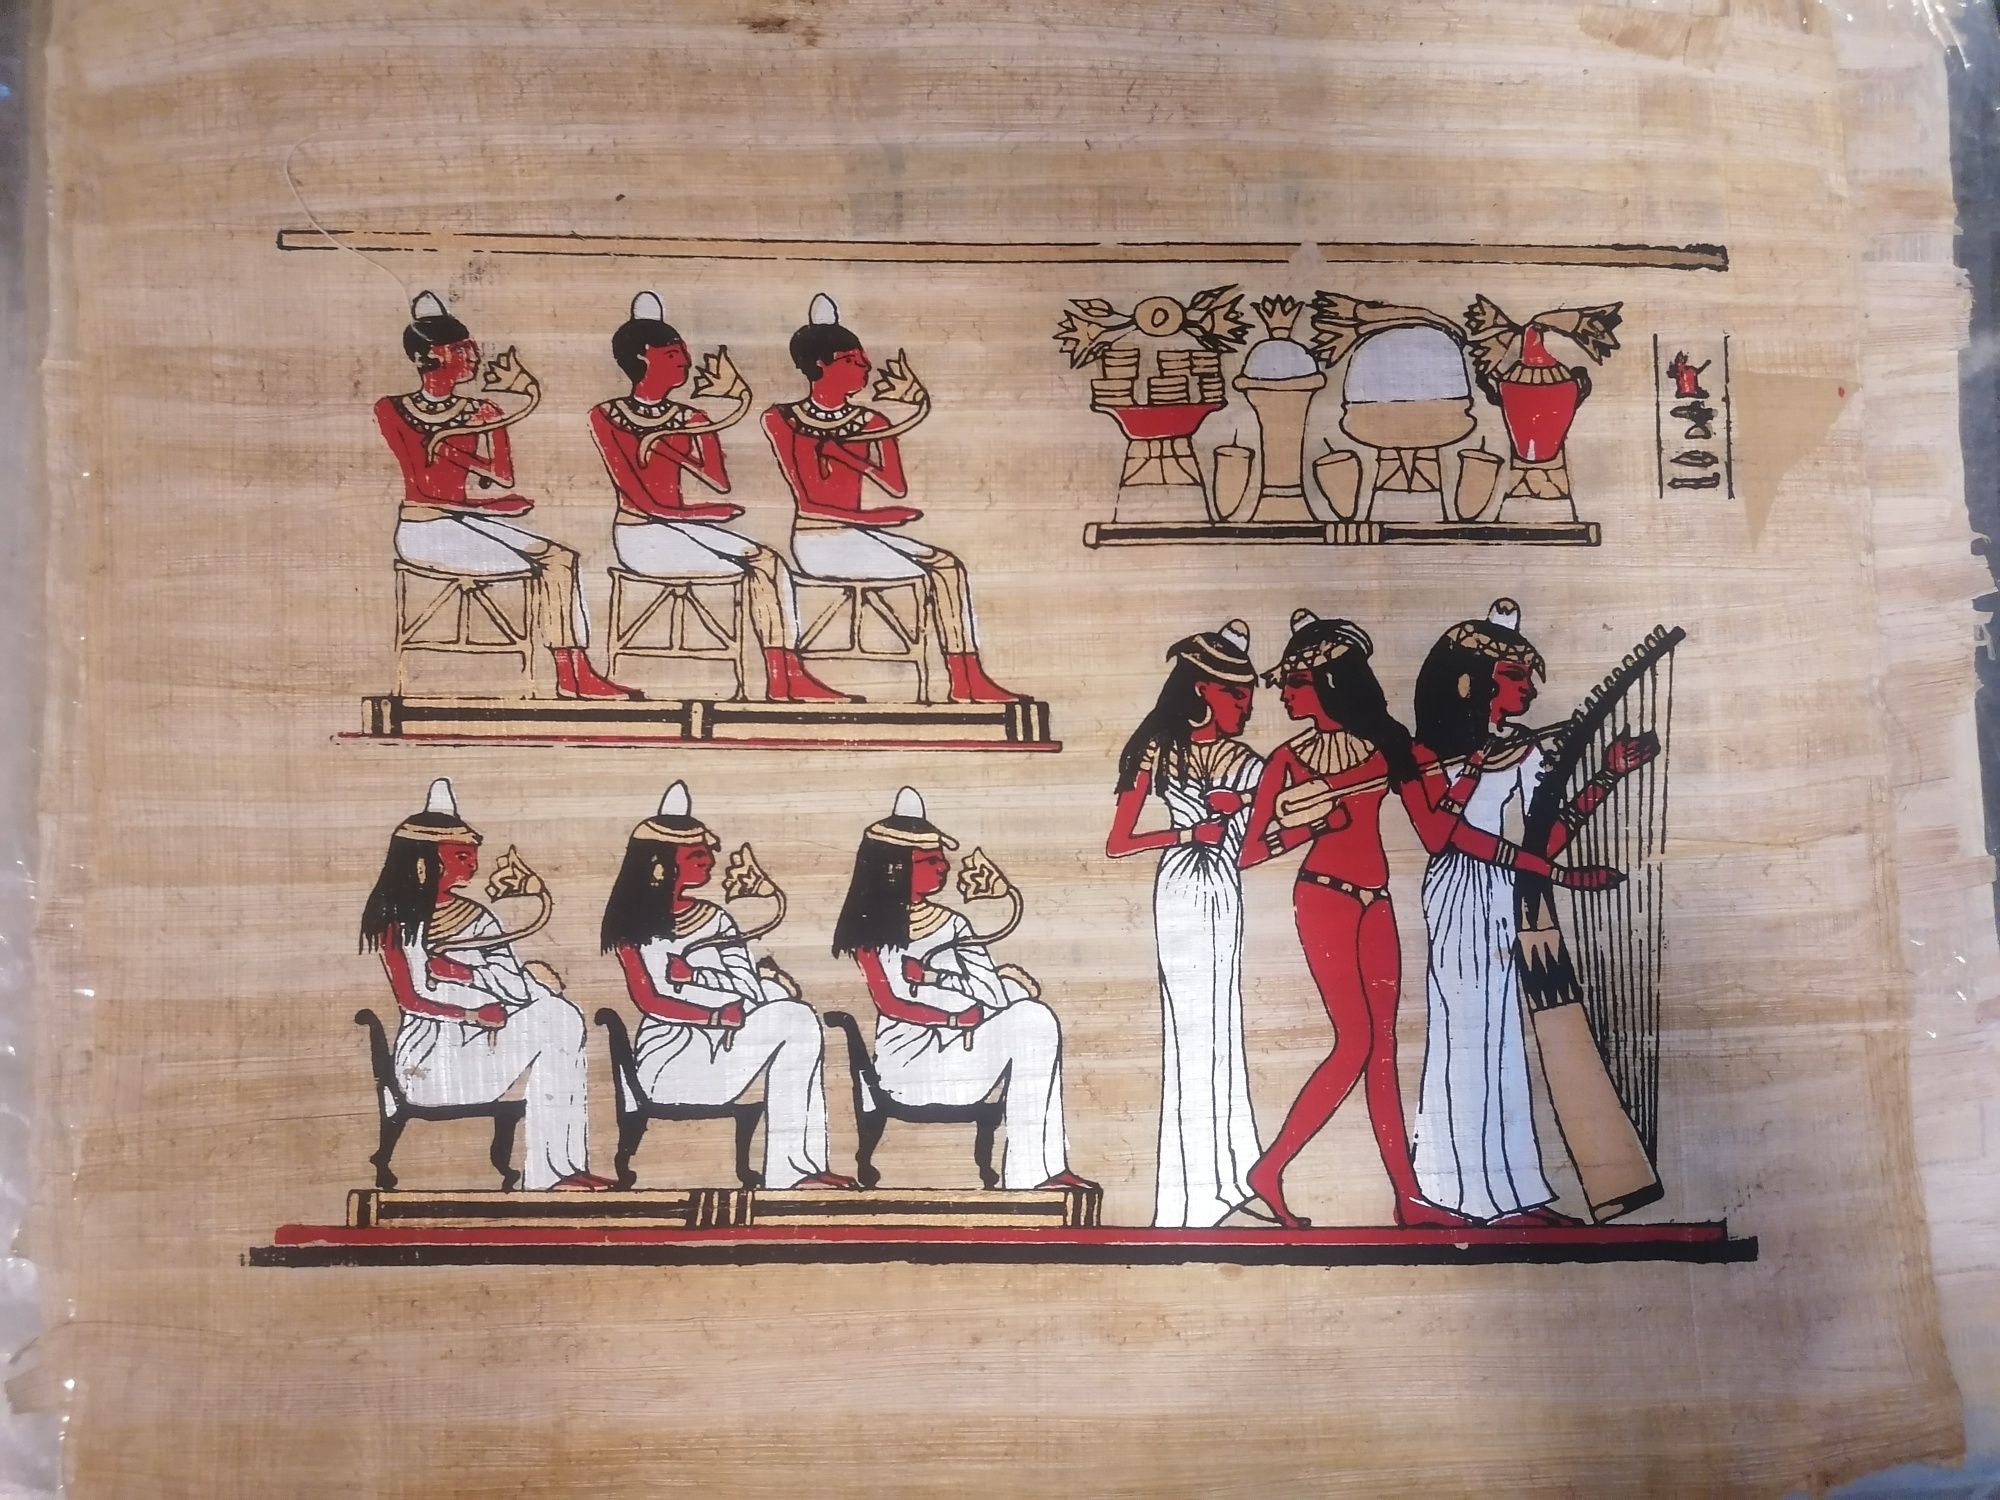 Obrazy Egipskie na papirusie